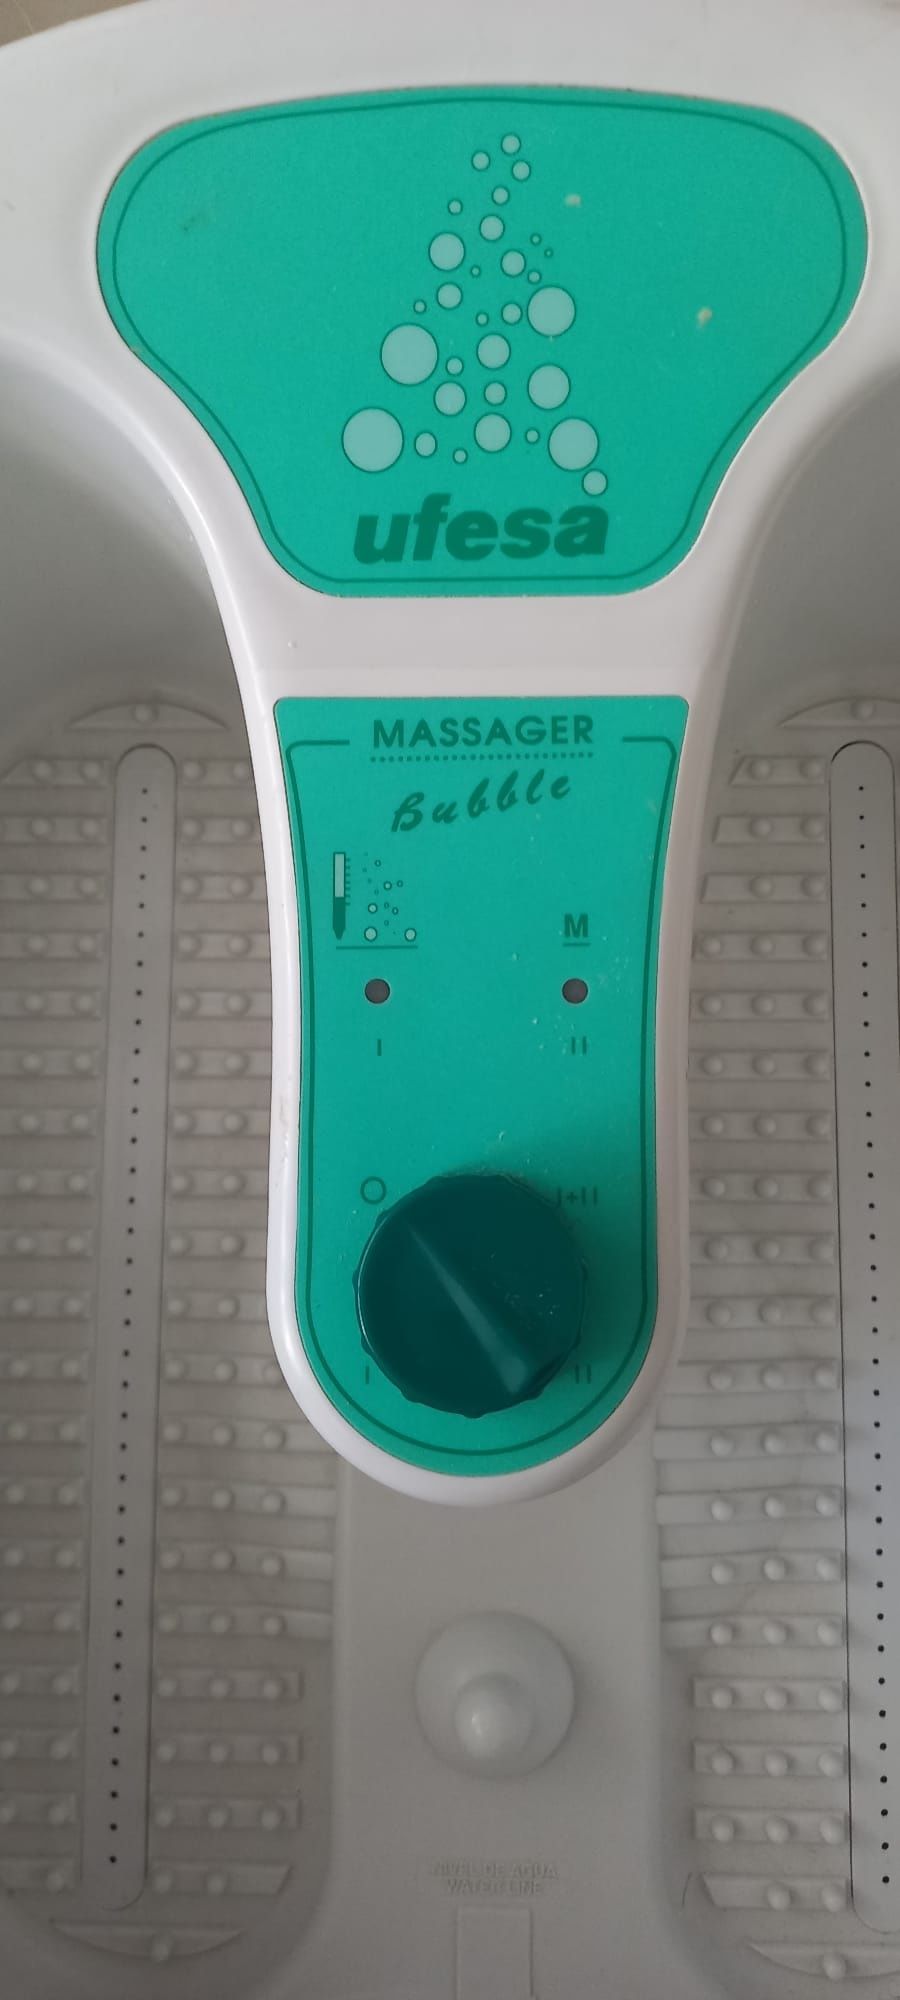 Hidro massagem Ufesa